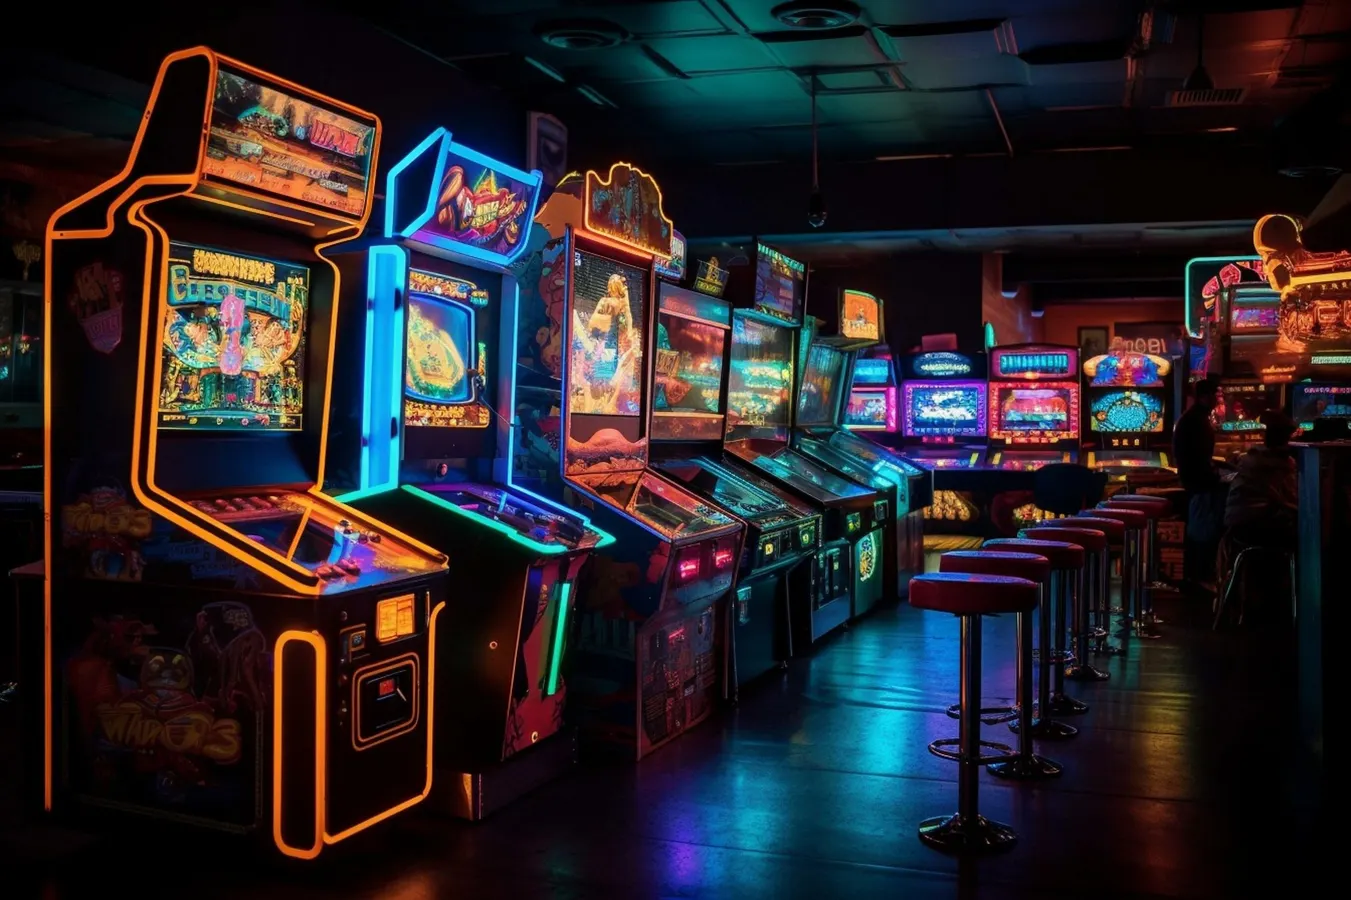 future trends in arcade gaming